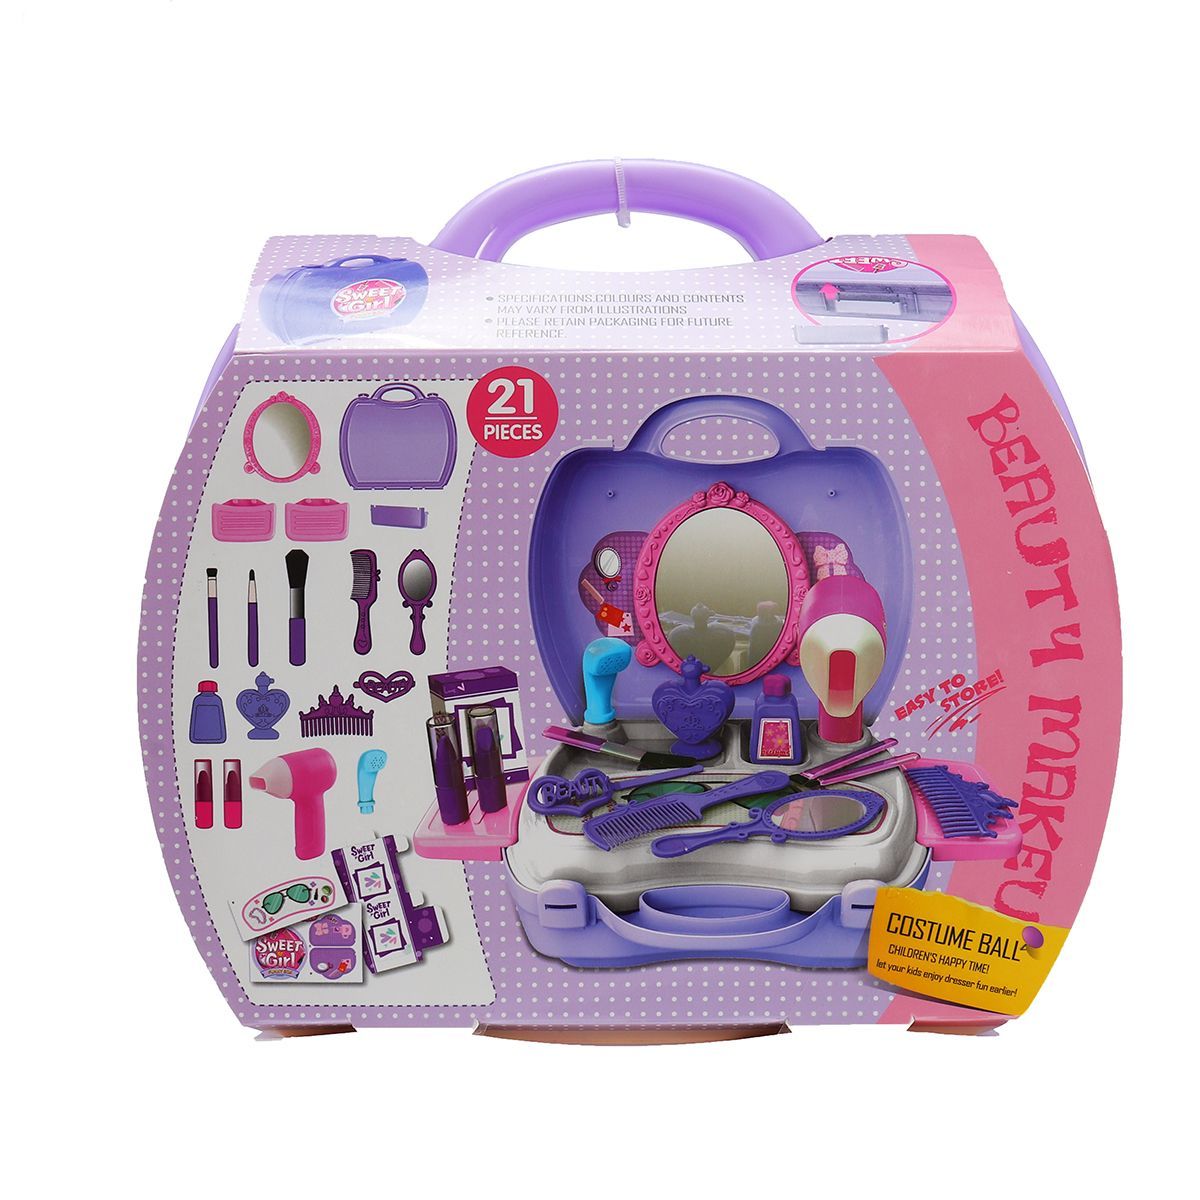 Set-of-Pricess-Makeup-Hairdressing-Kit-Kids-Girls-Pretend-Play-Children-Toys-Gift-1515716